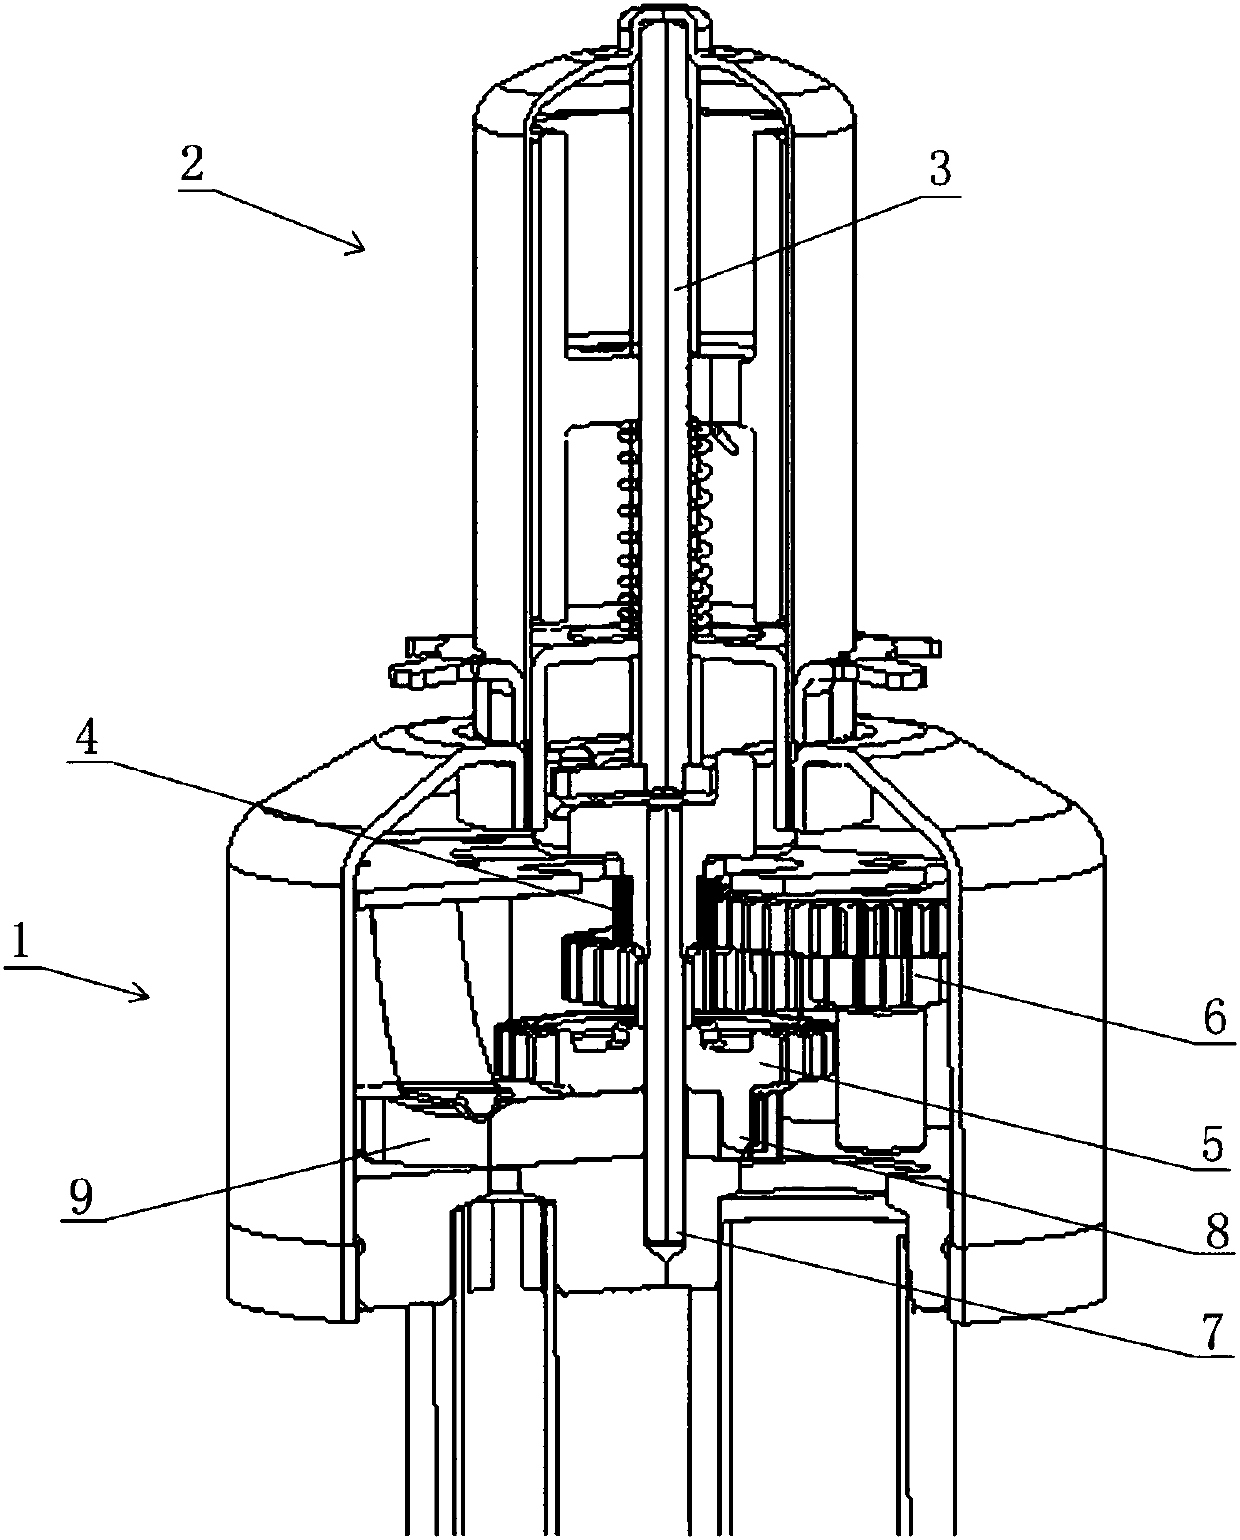 Electric three-way valve and refrigeration equipment